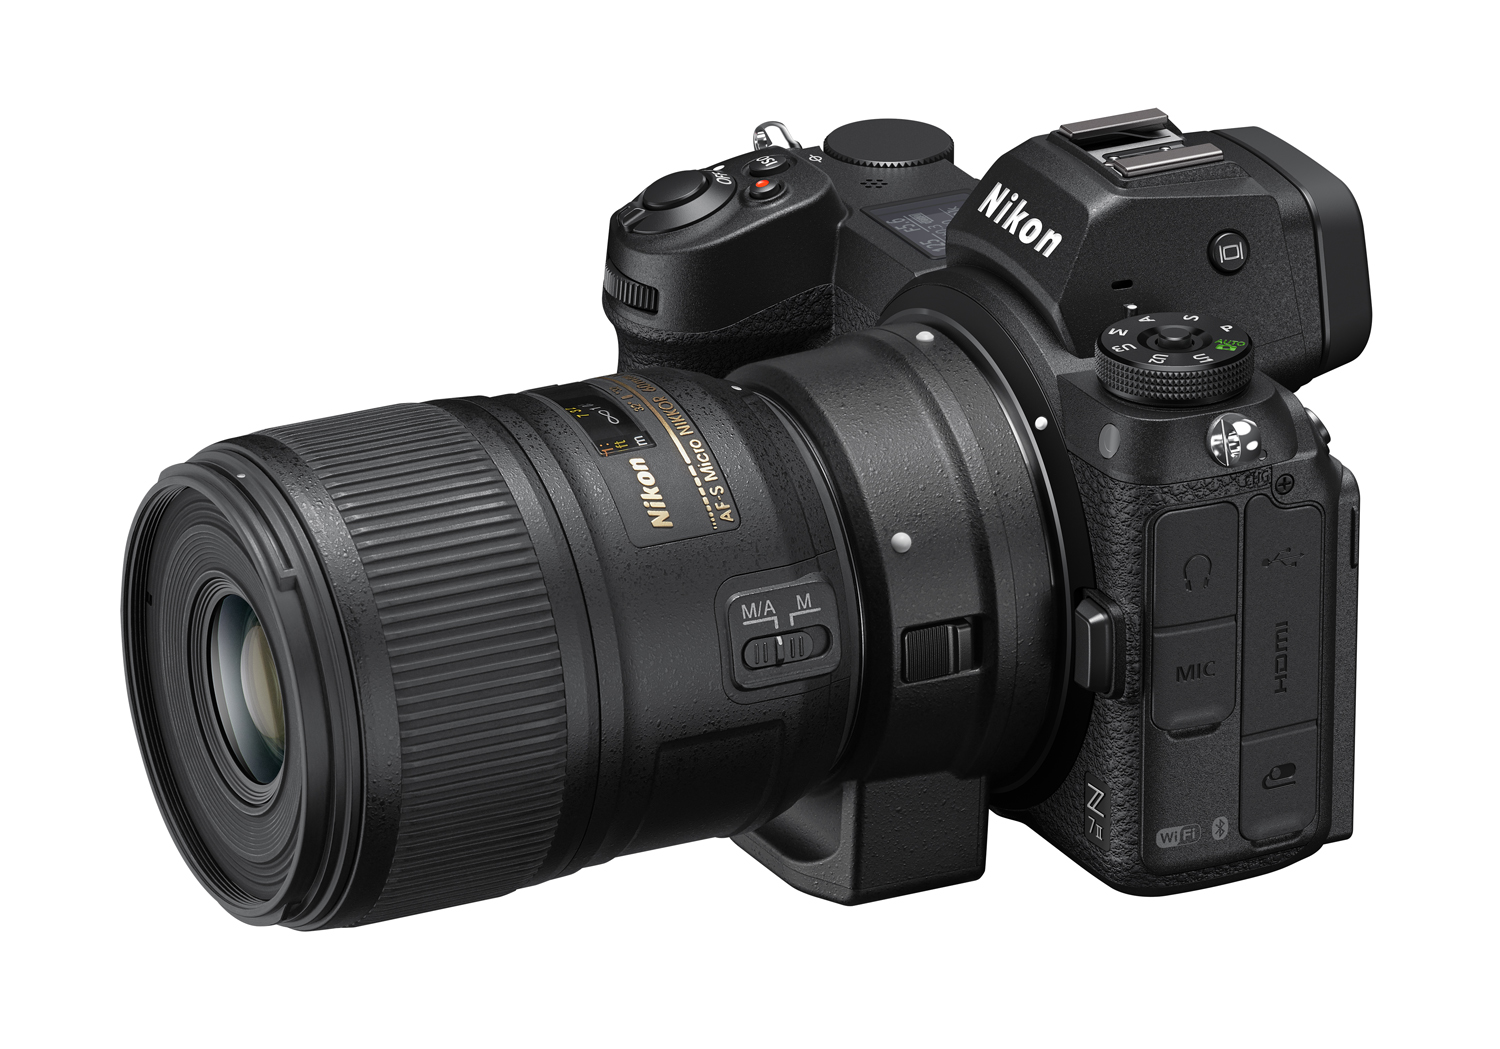 Micro Nikkor AF-S lens attached via adapter to Nikon Z7II.